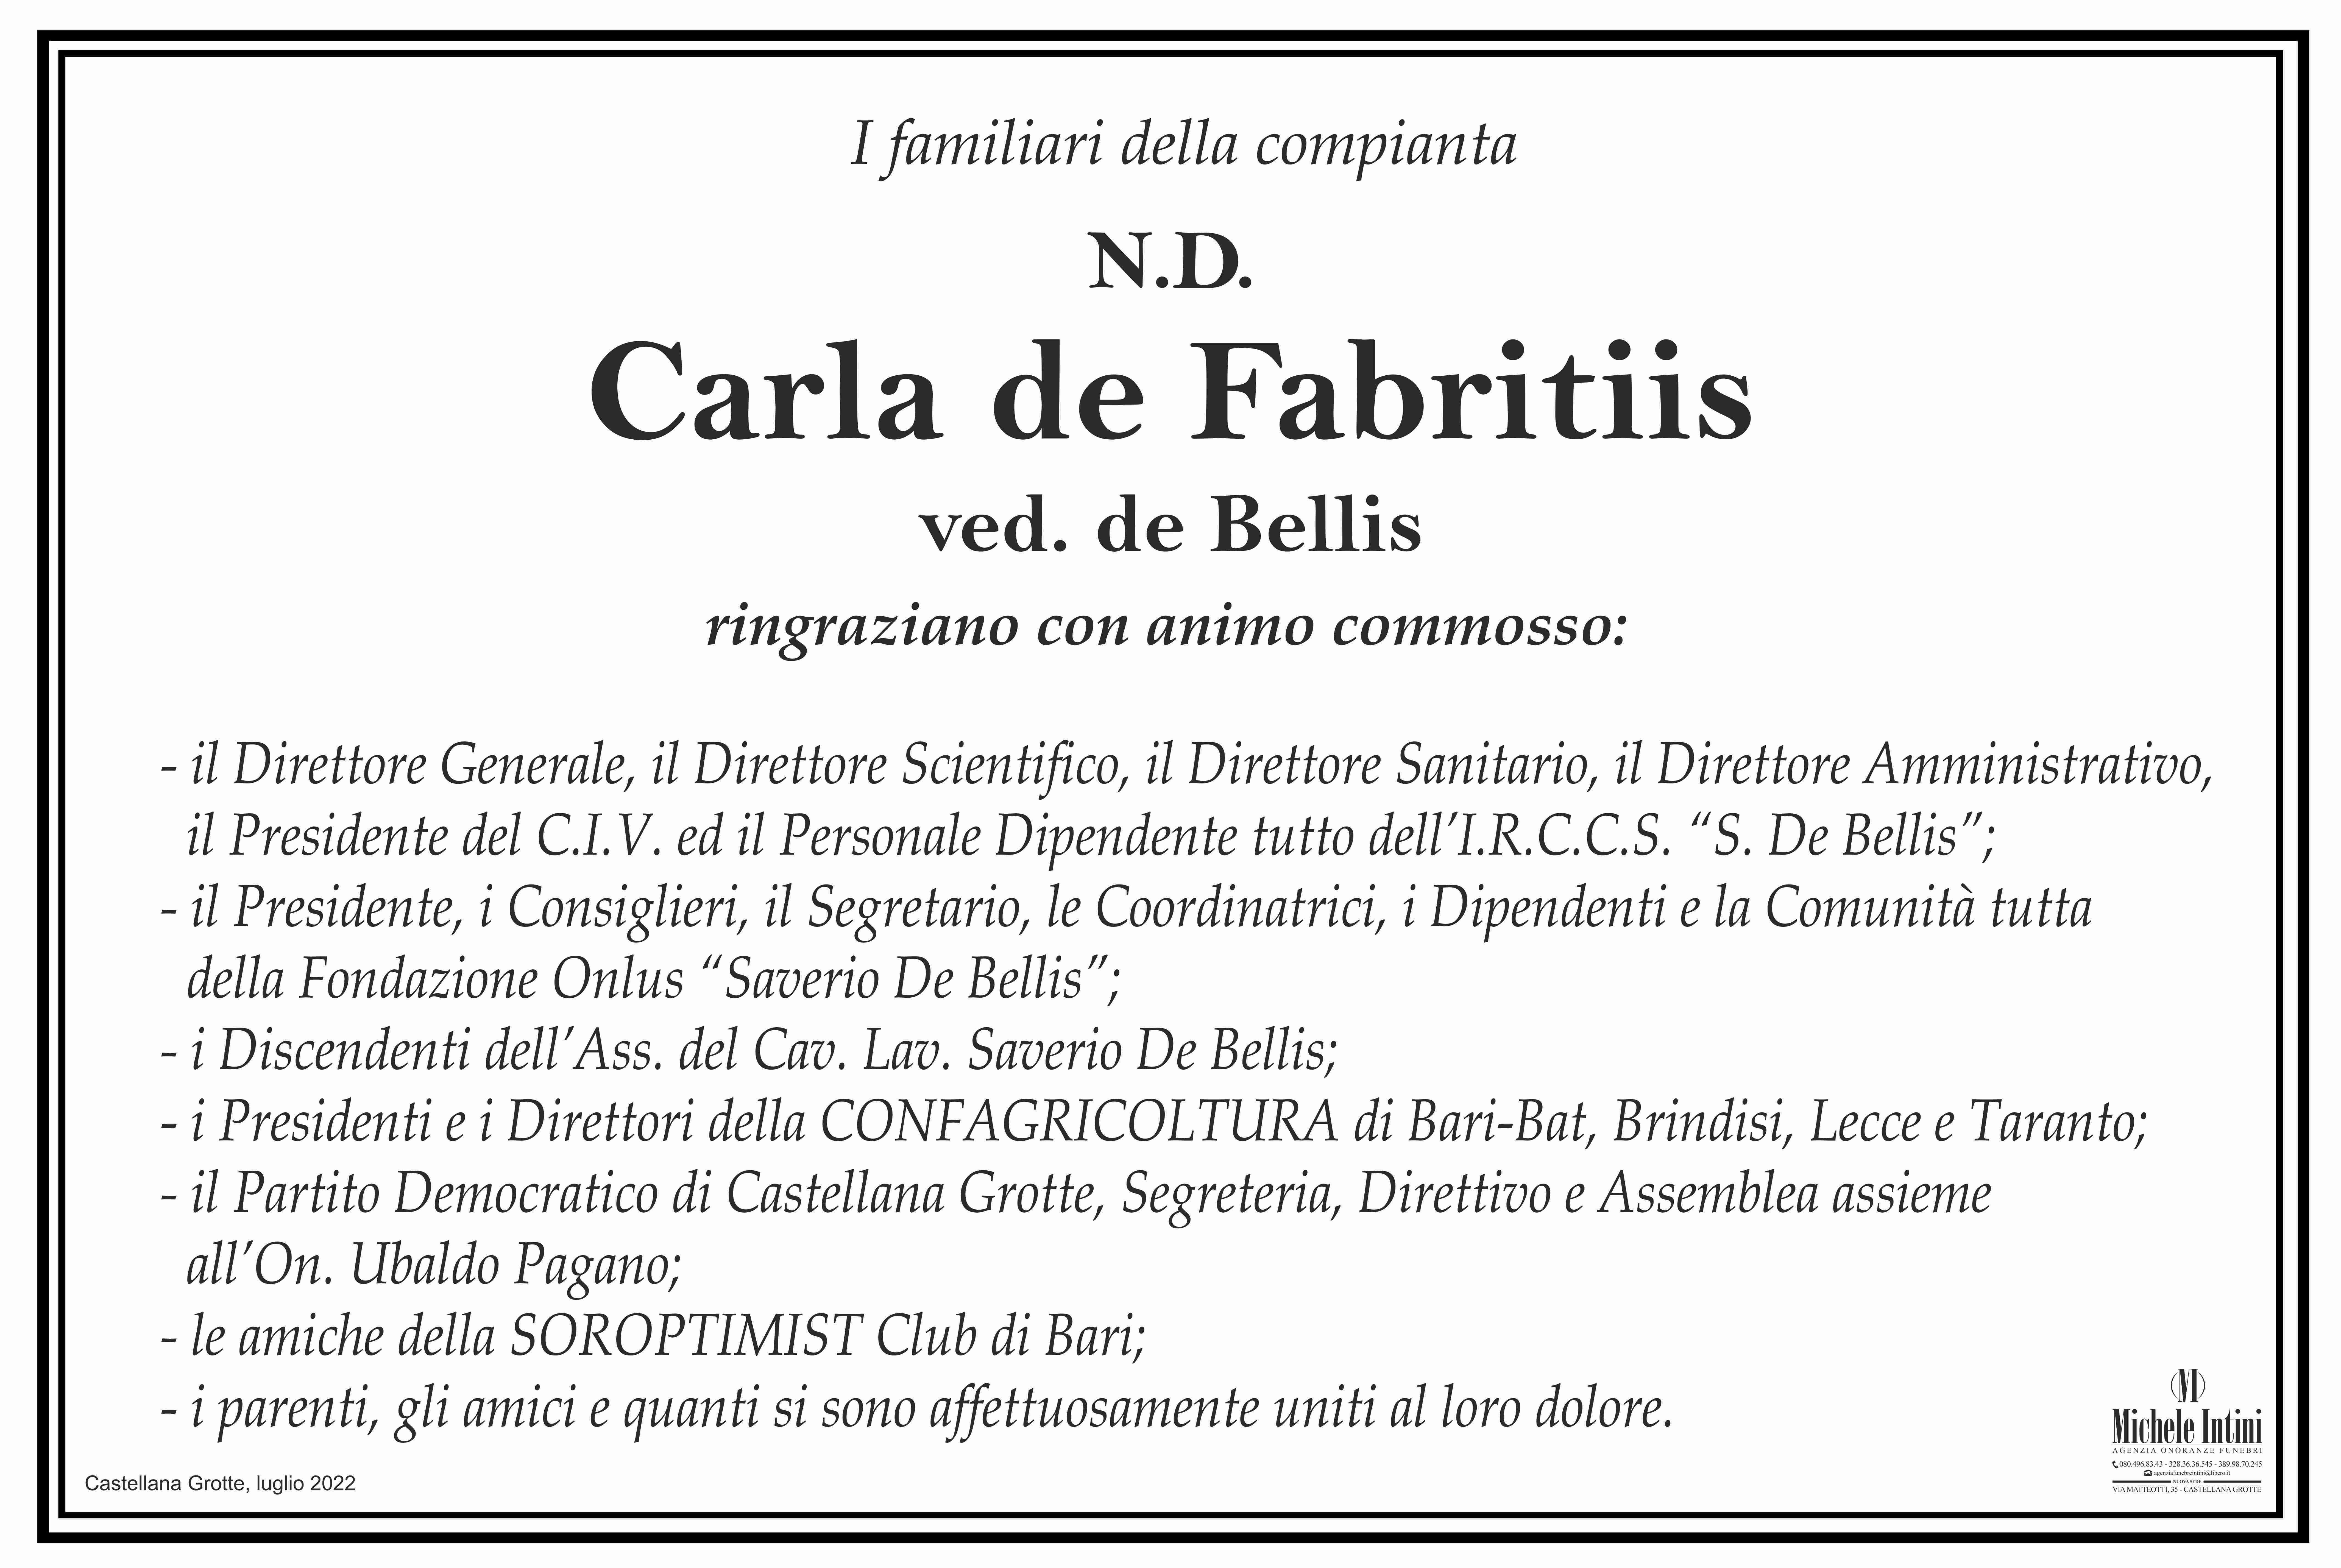 N.D. Carla de Fabritiis